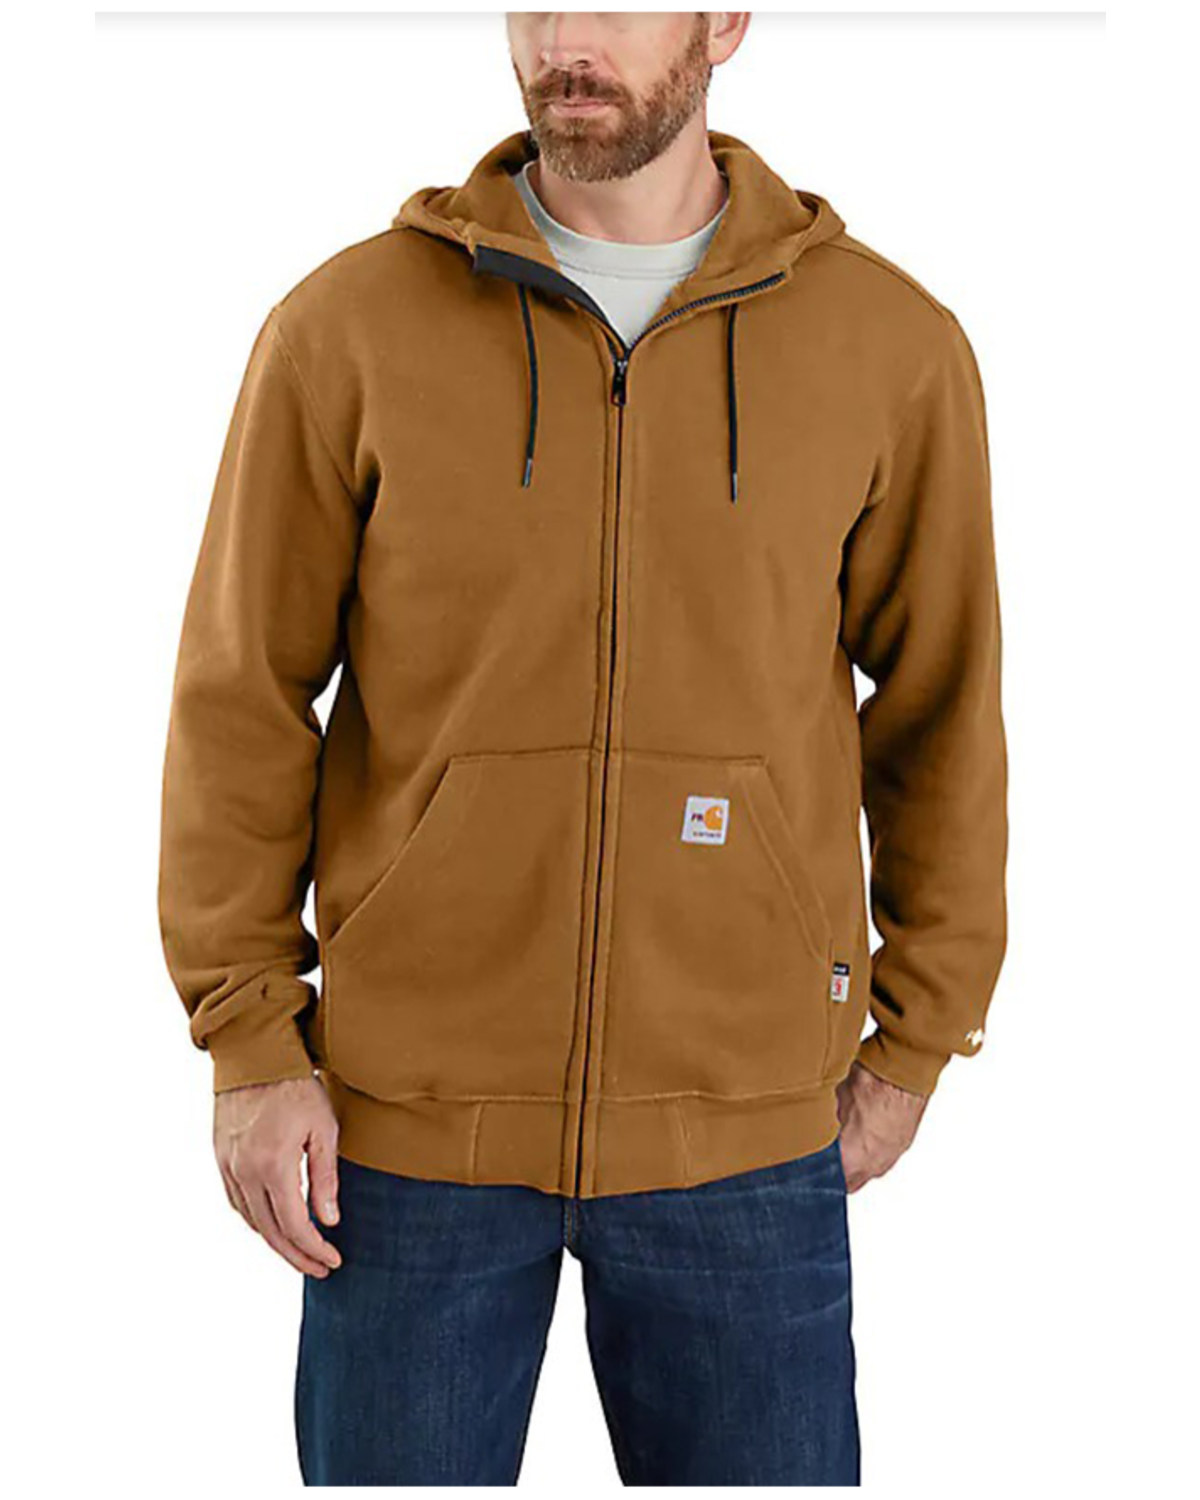 Carhartt Men's FR Force Original Fit Zip-Front Hooded Work Jacket